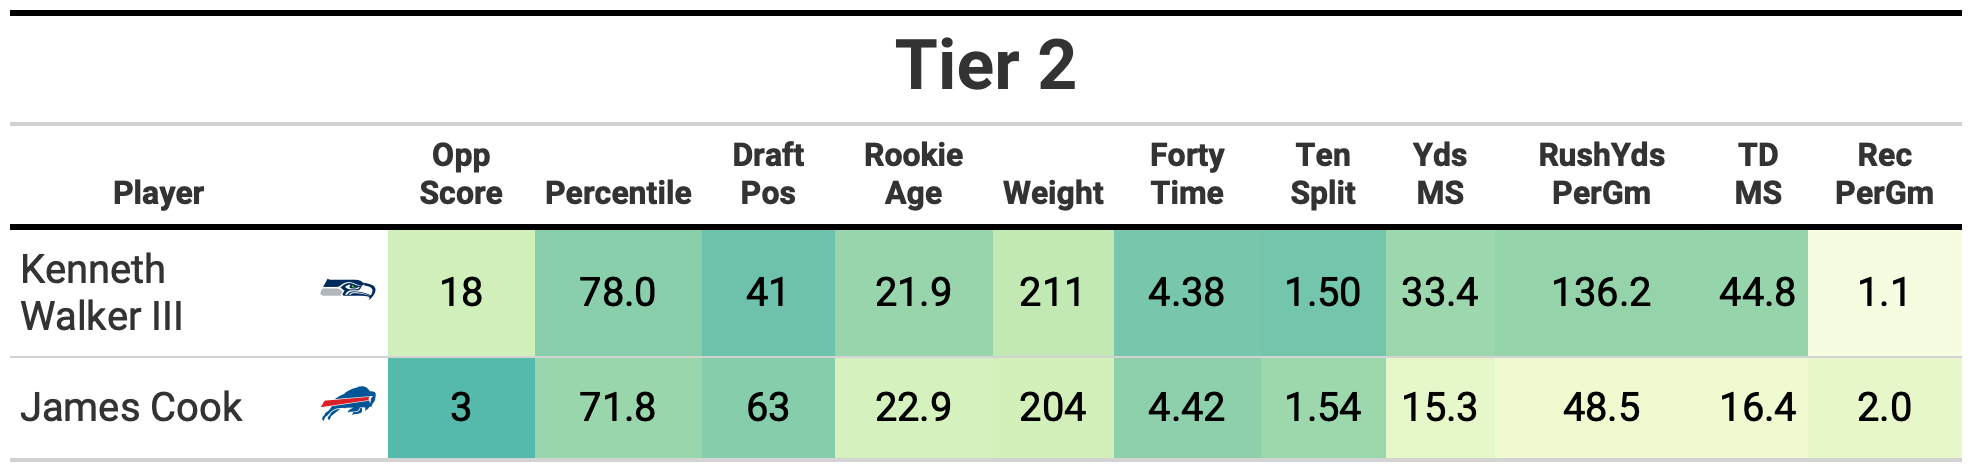 dynasty rookie draft rankings 2022